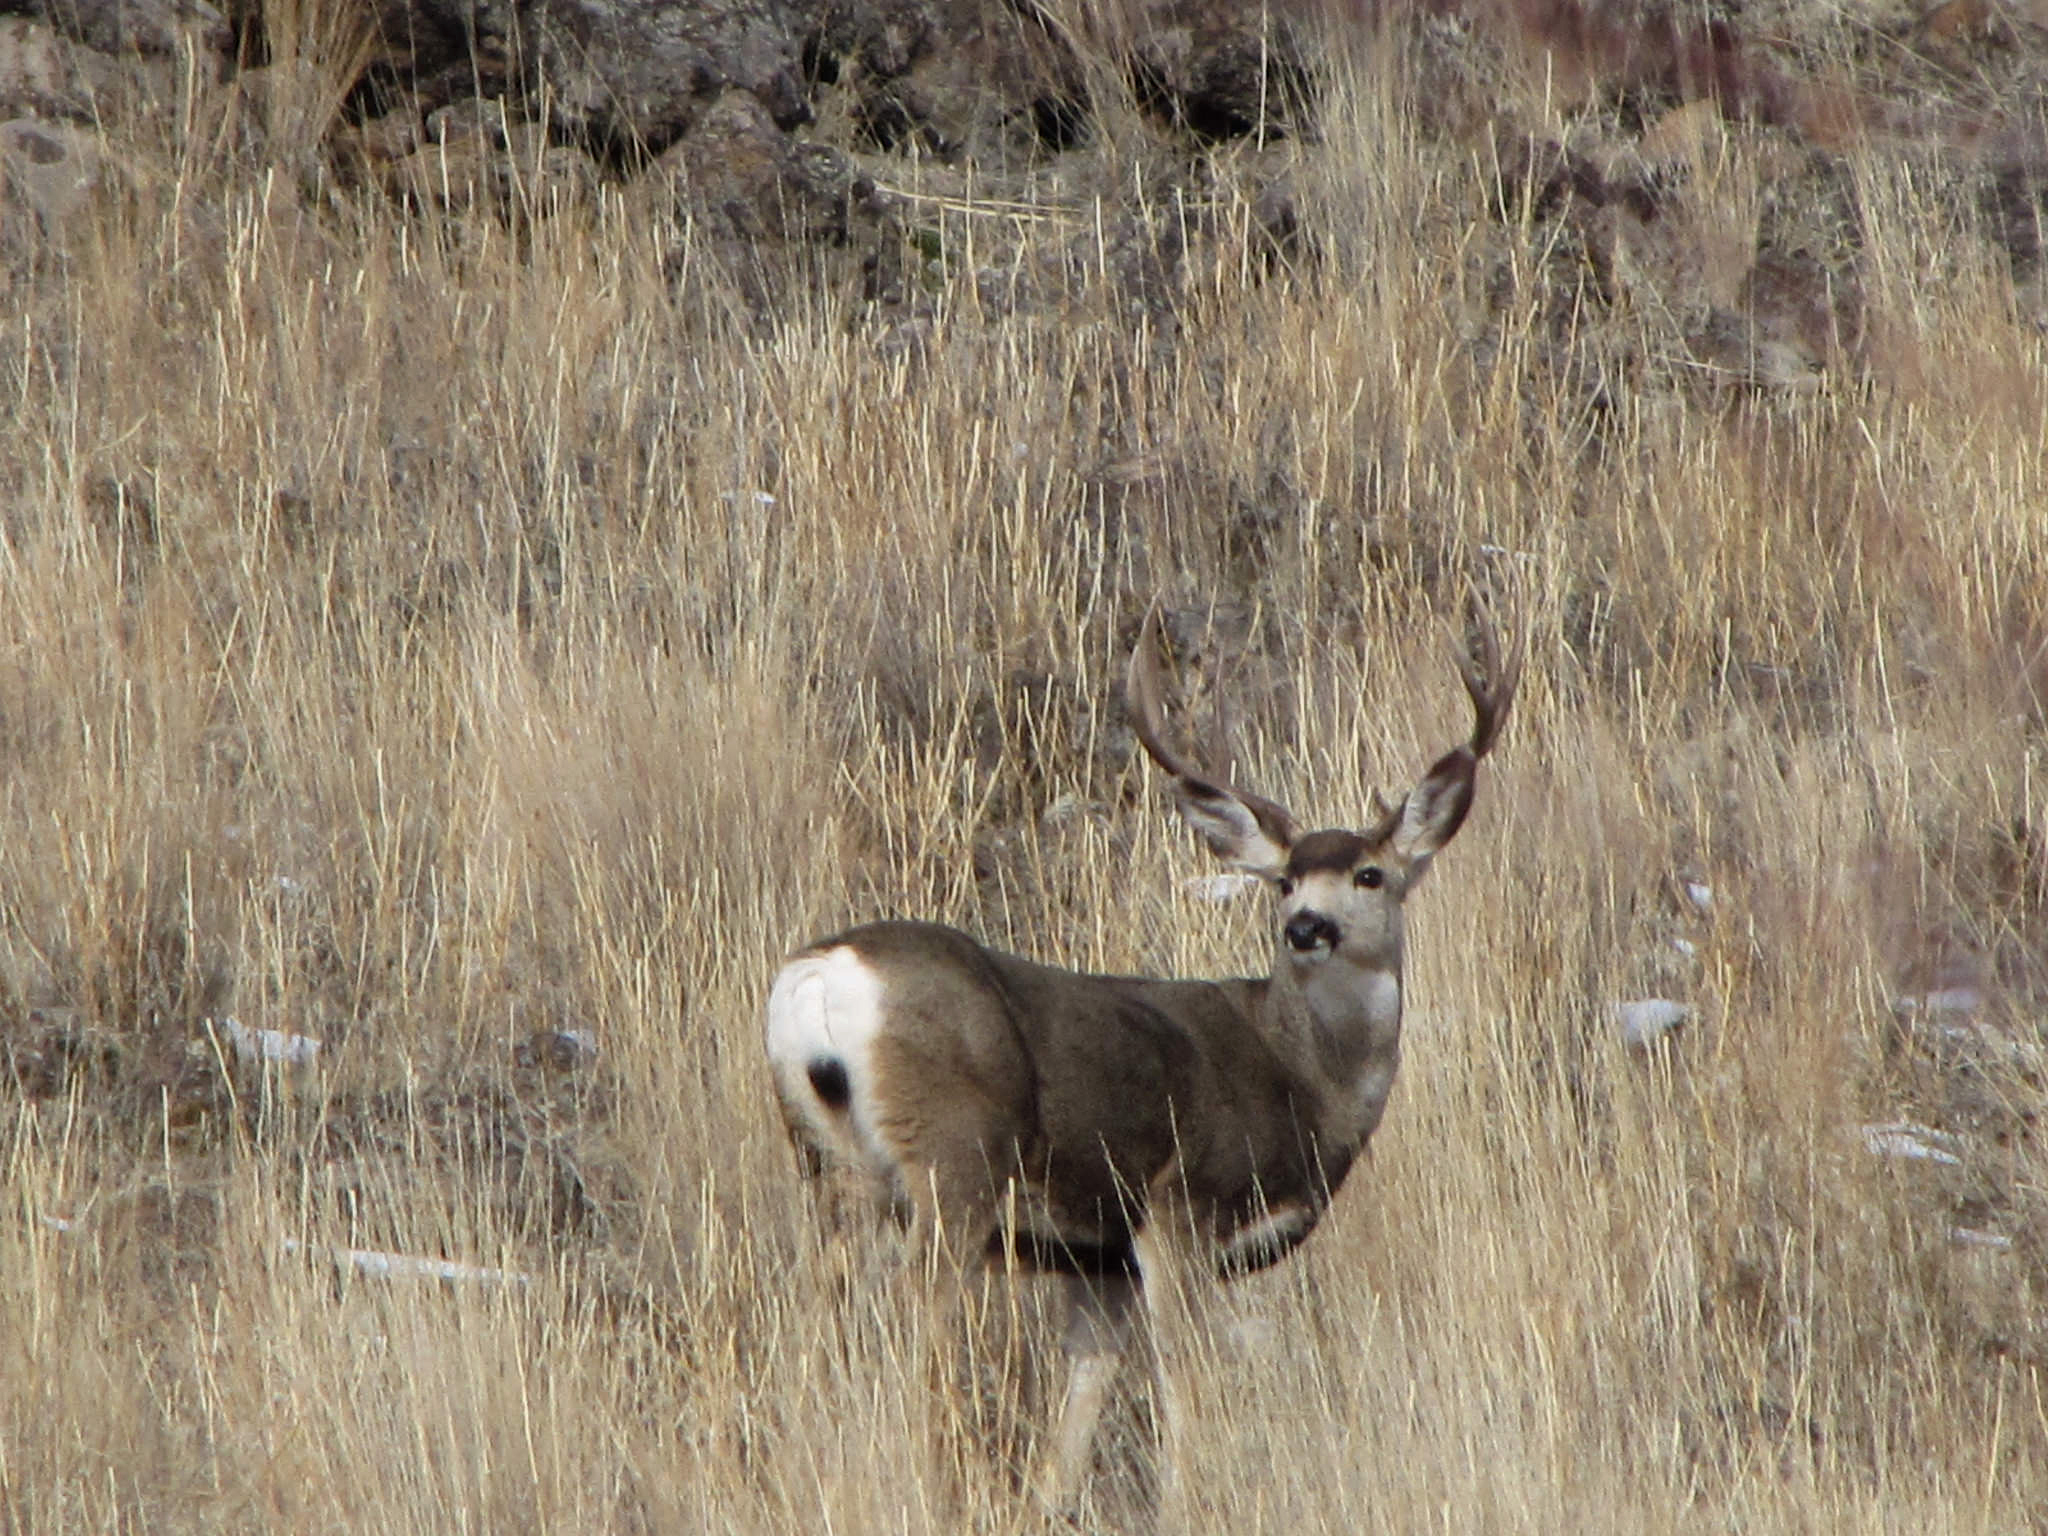 mule deer buck in grass medium shot January 2016